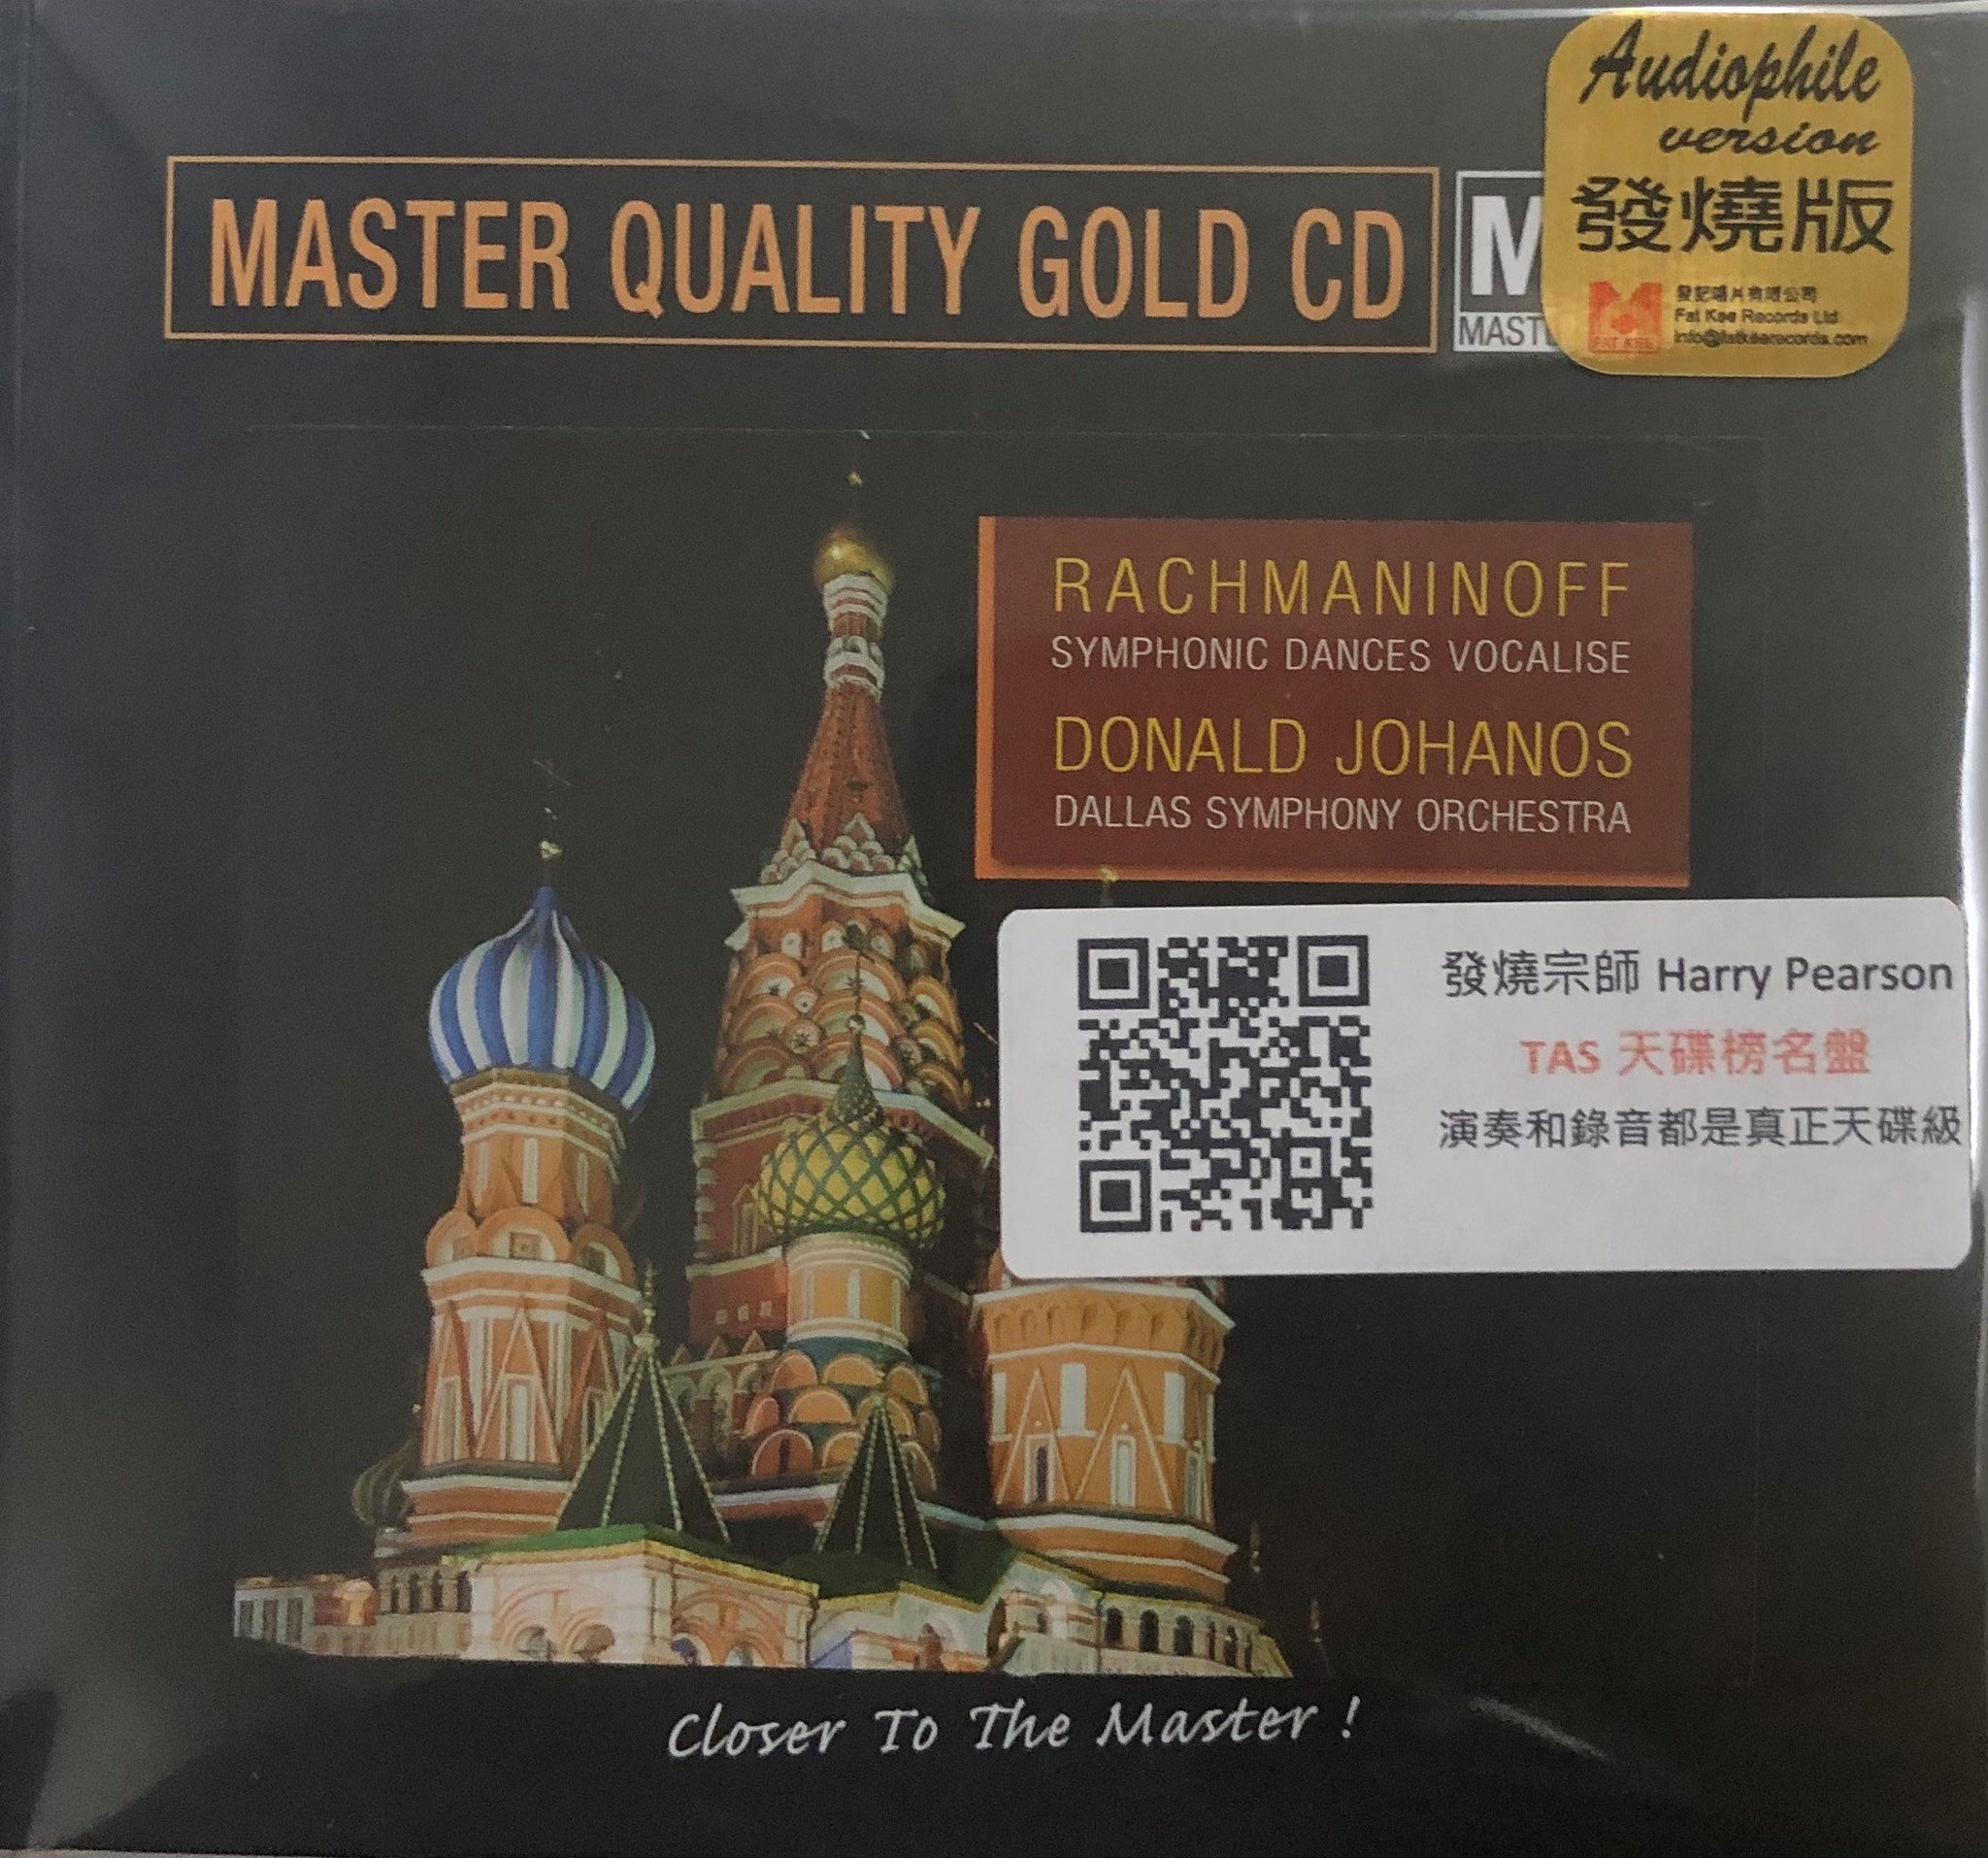 RACHMANINOFF SYMPHONIC DANCES VOCALISE DONALD JOHA master quality (MQGCD) CD